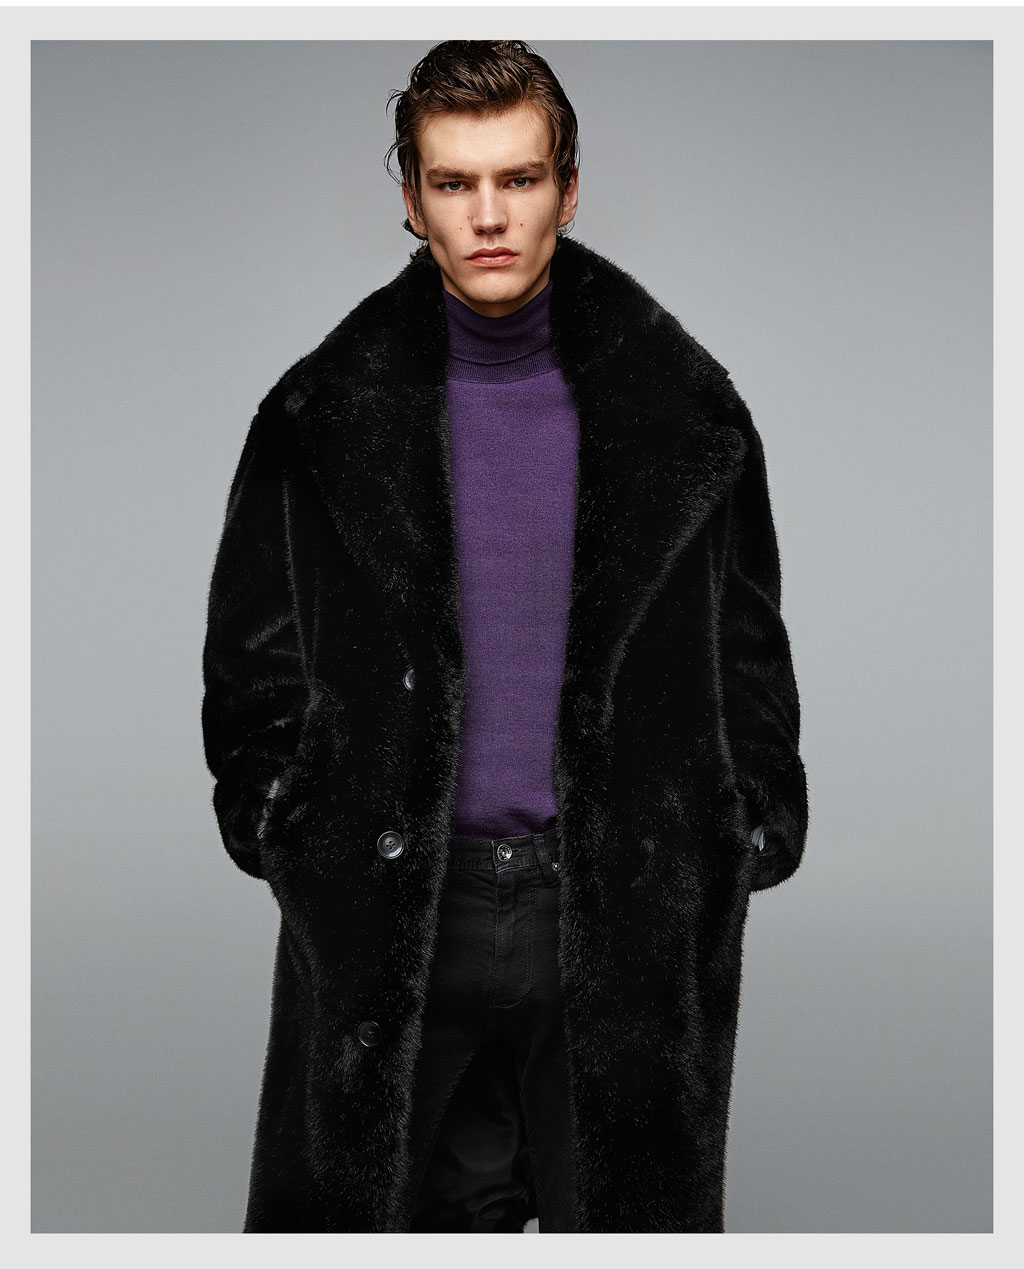 Zara Mens Faux Fur Coat 2017 F/W 